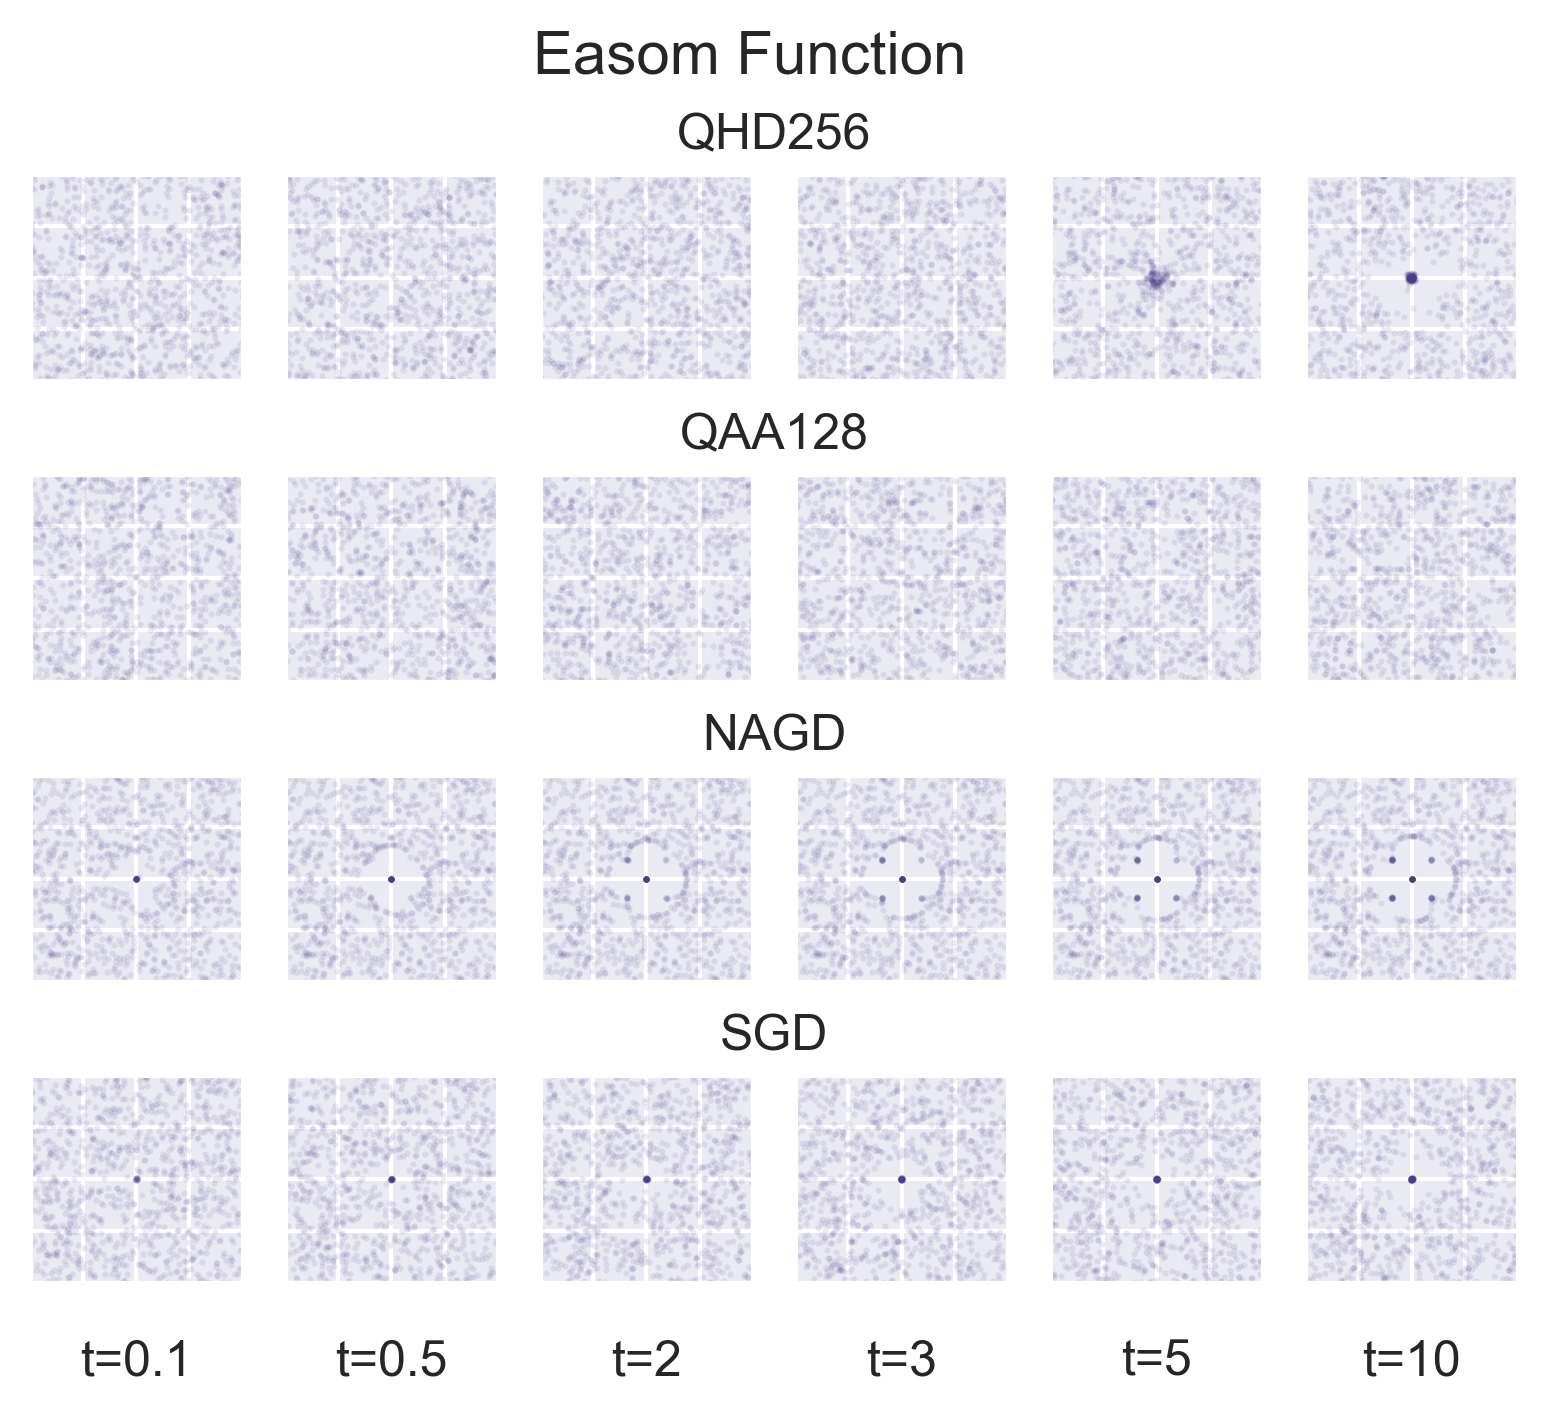 Comparison of optimization methods on easom